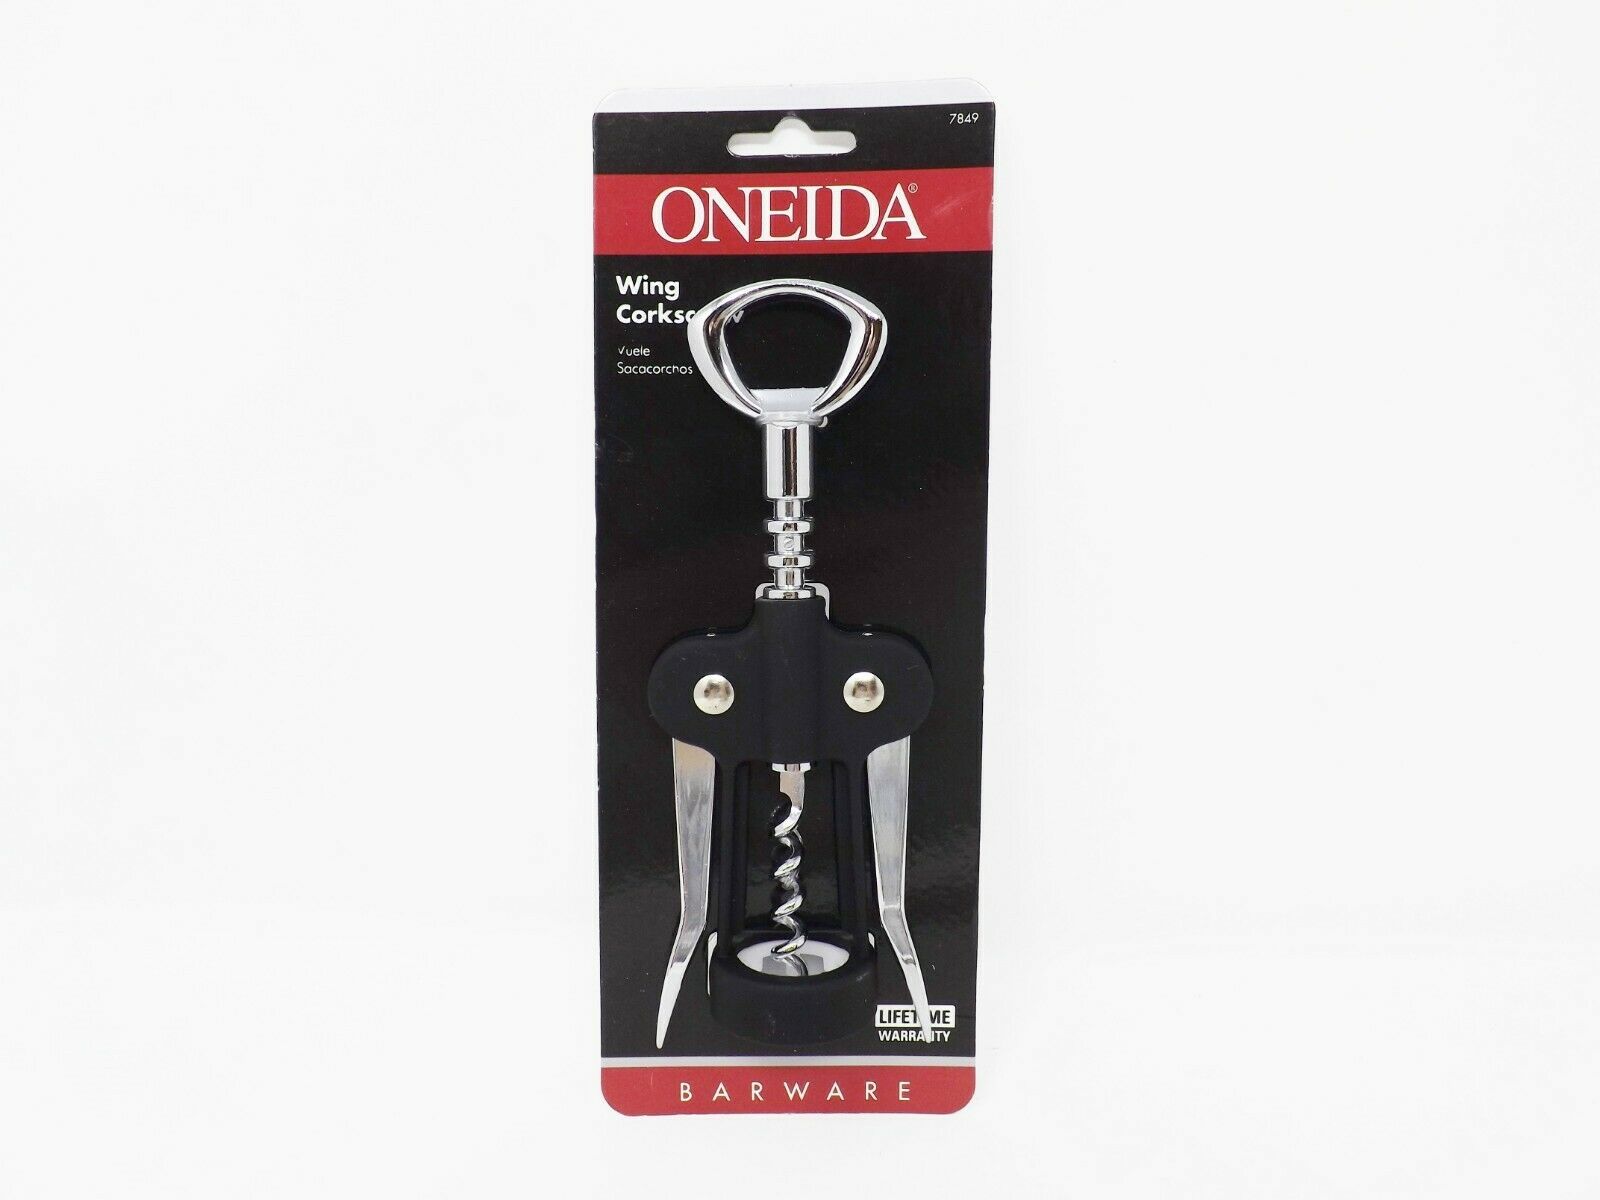 Oneida Barware Wing Corkscrew - $14.95